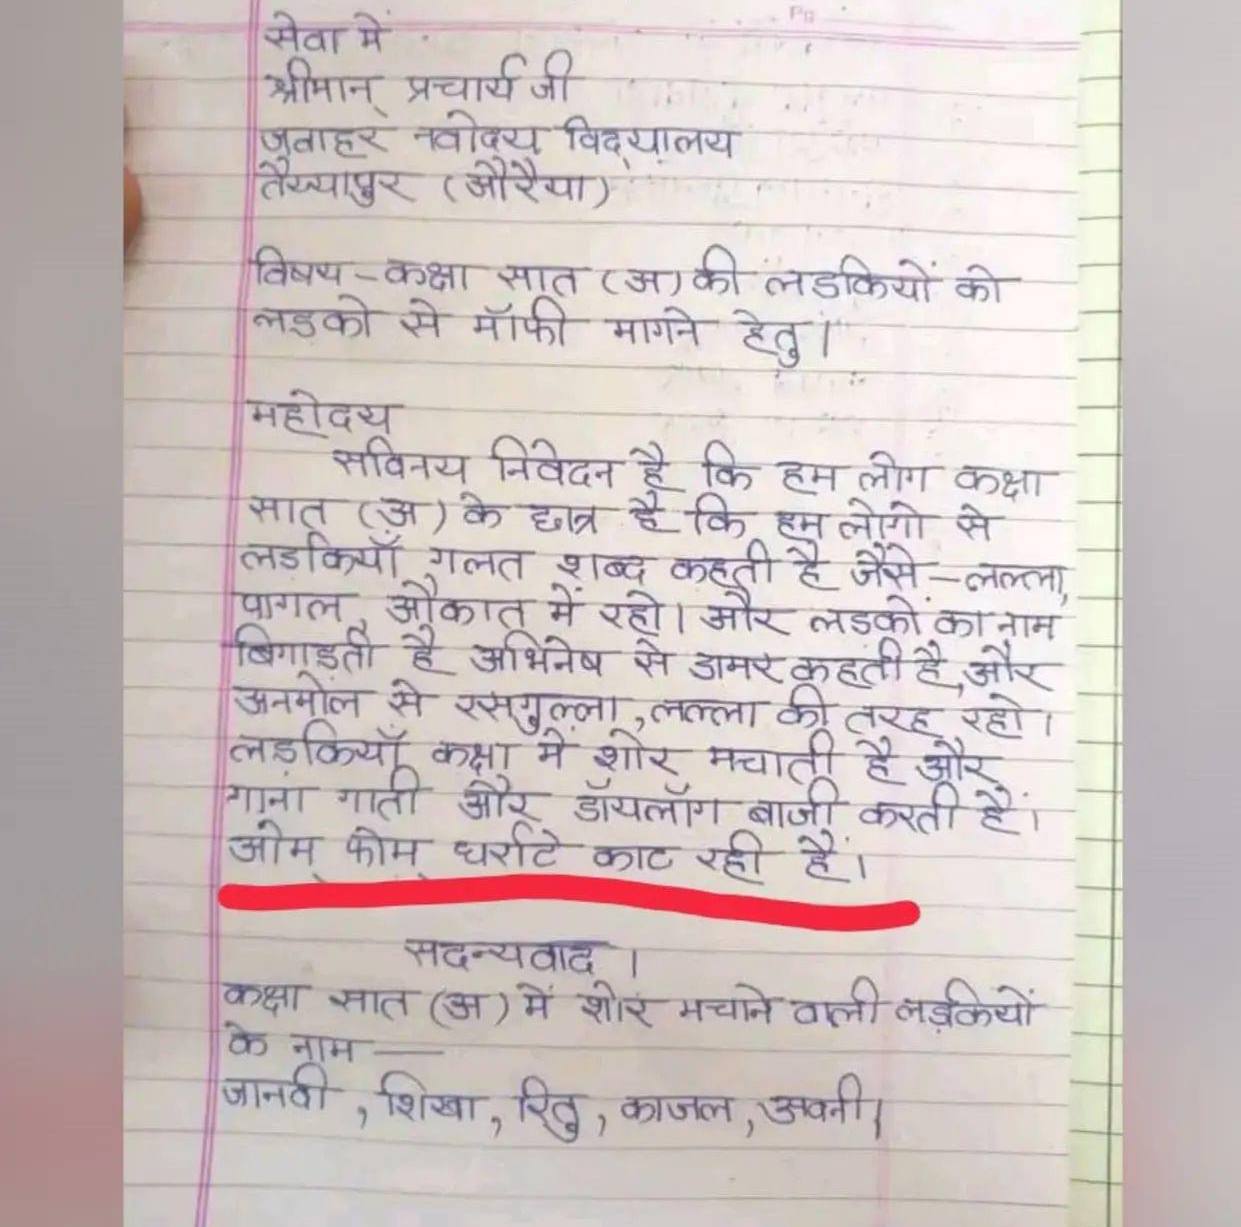 NVS 7th Students application gone viral in social media against girls